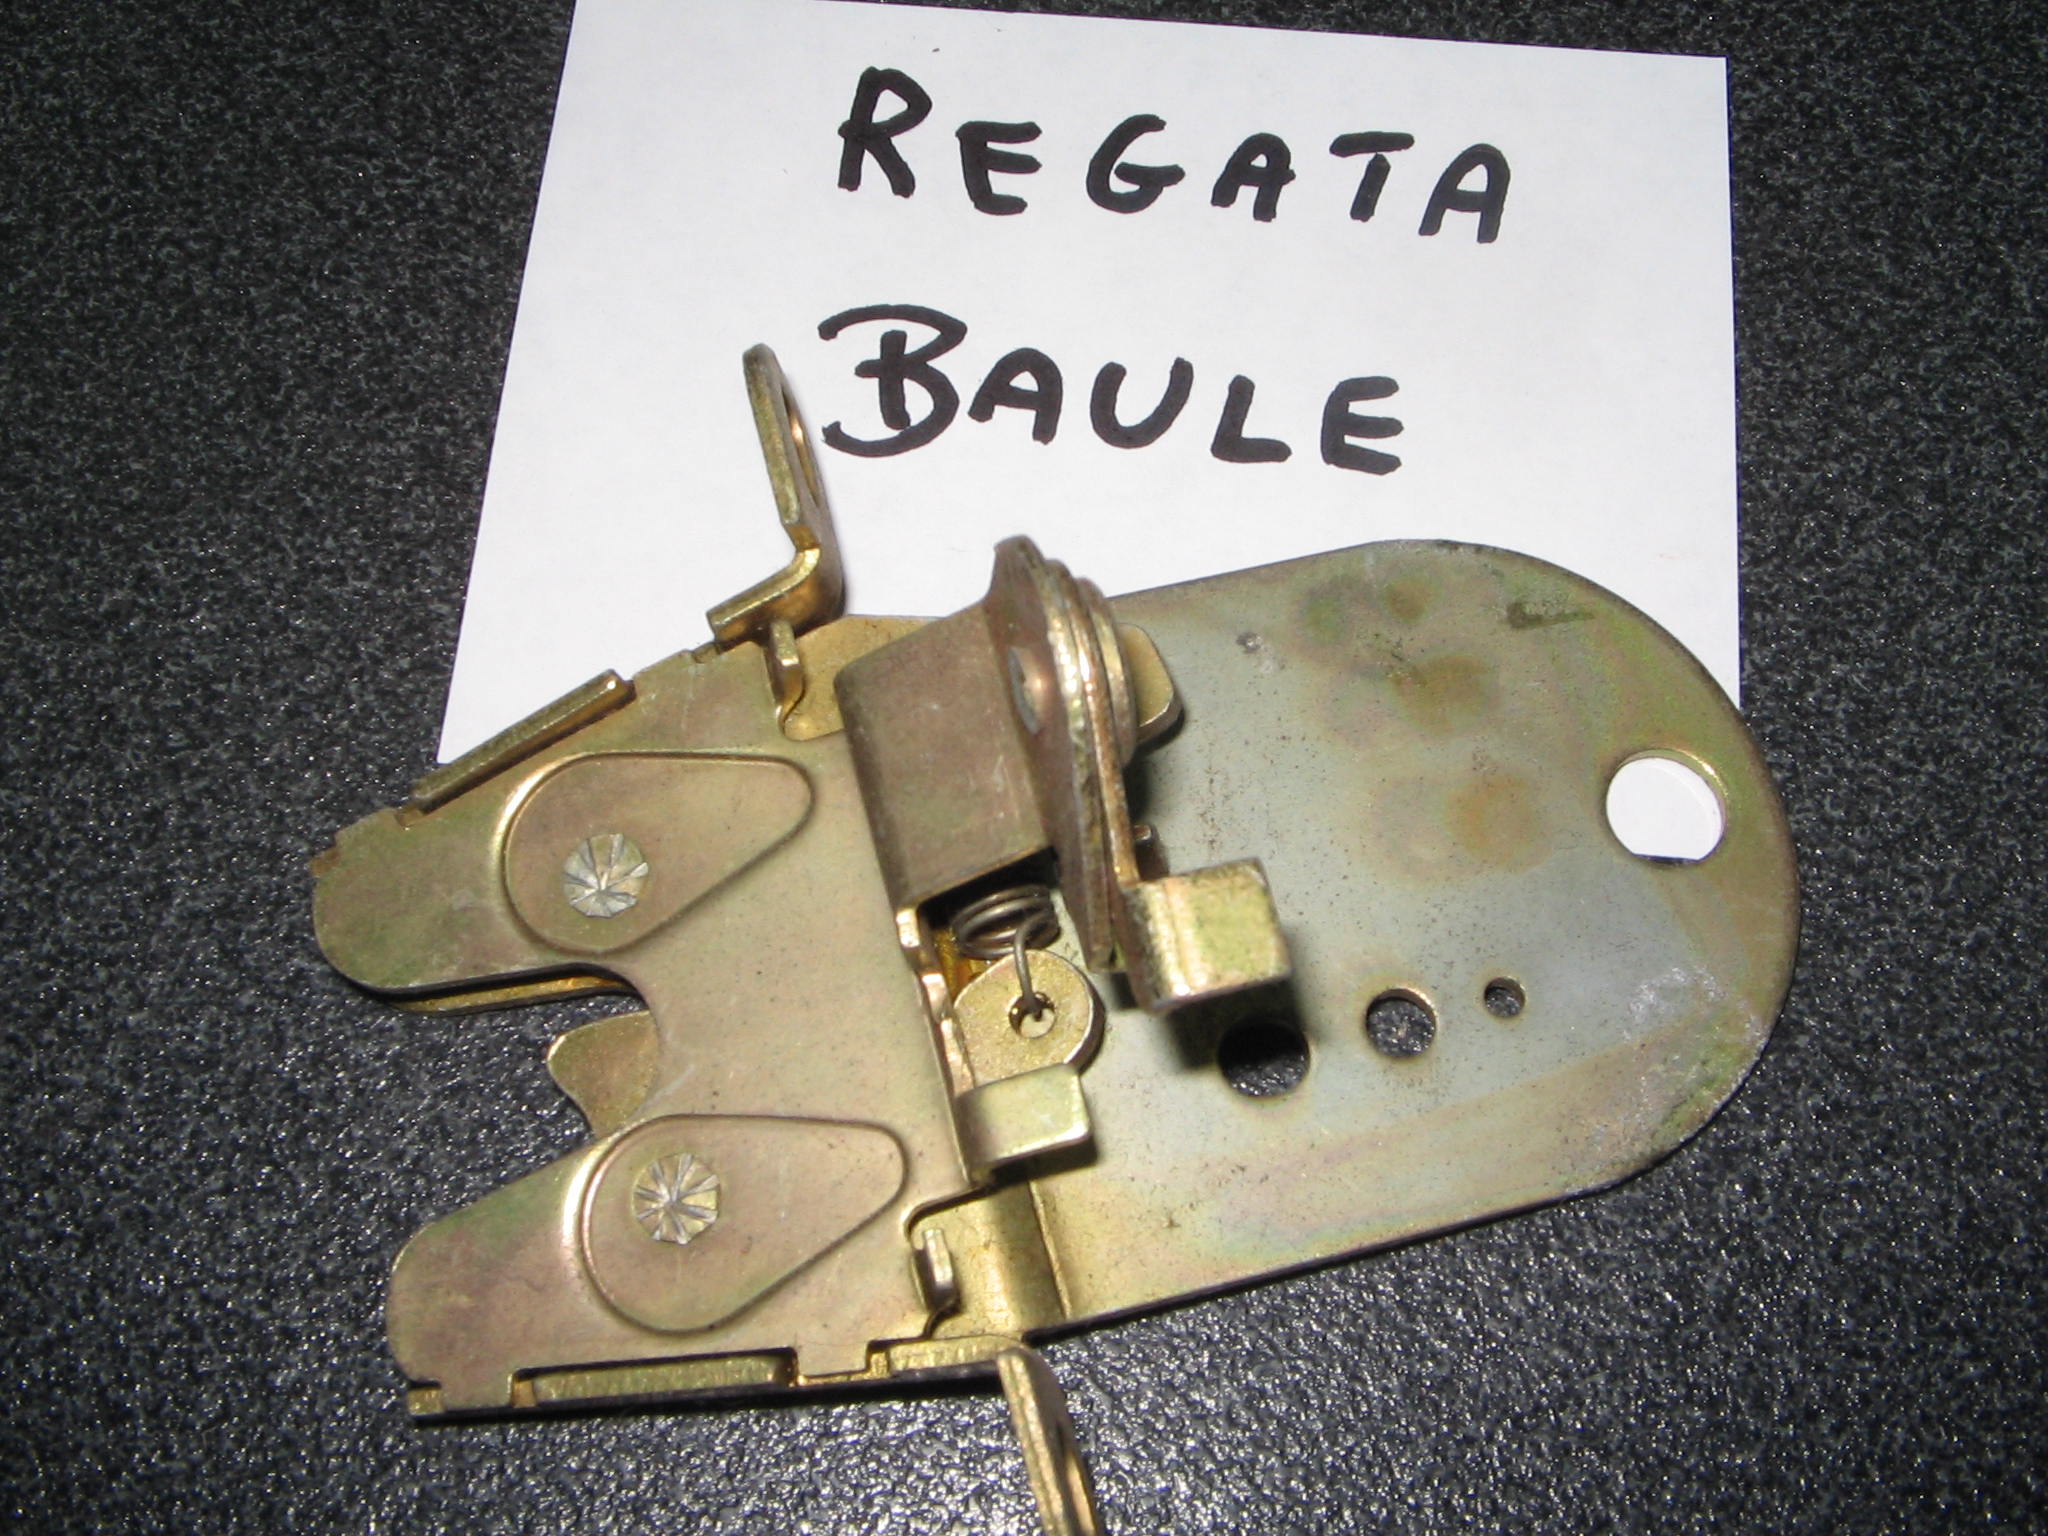 FIAT REGATA  SERRATURA  BAULE     ART.1189